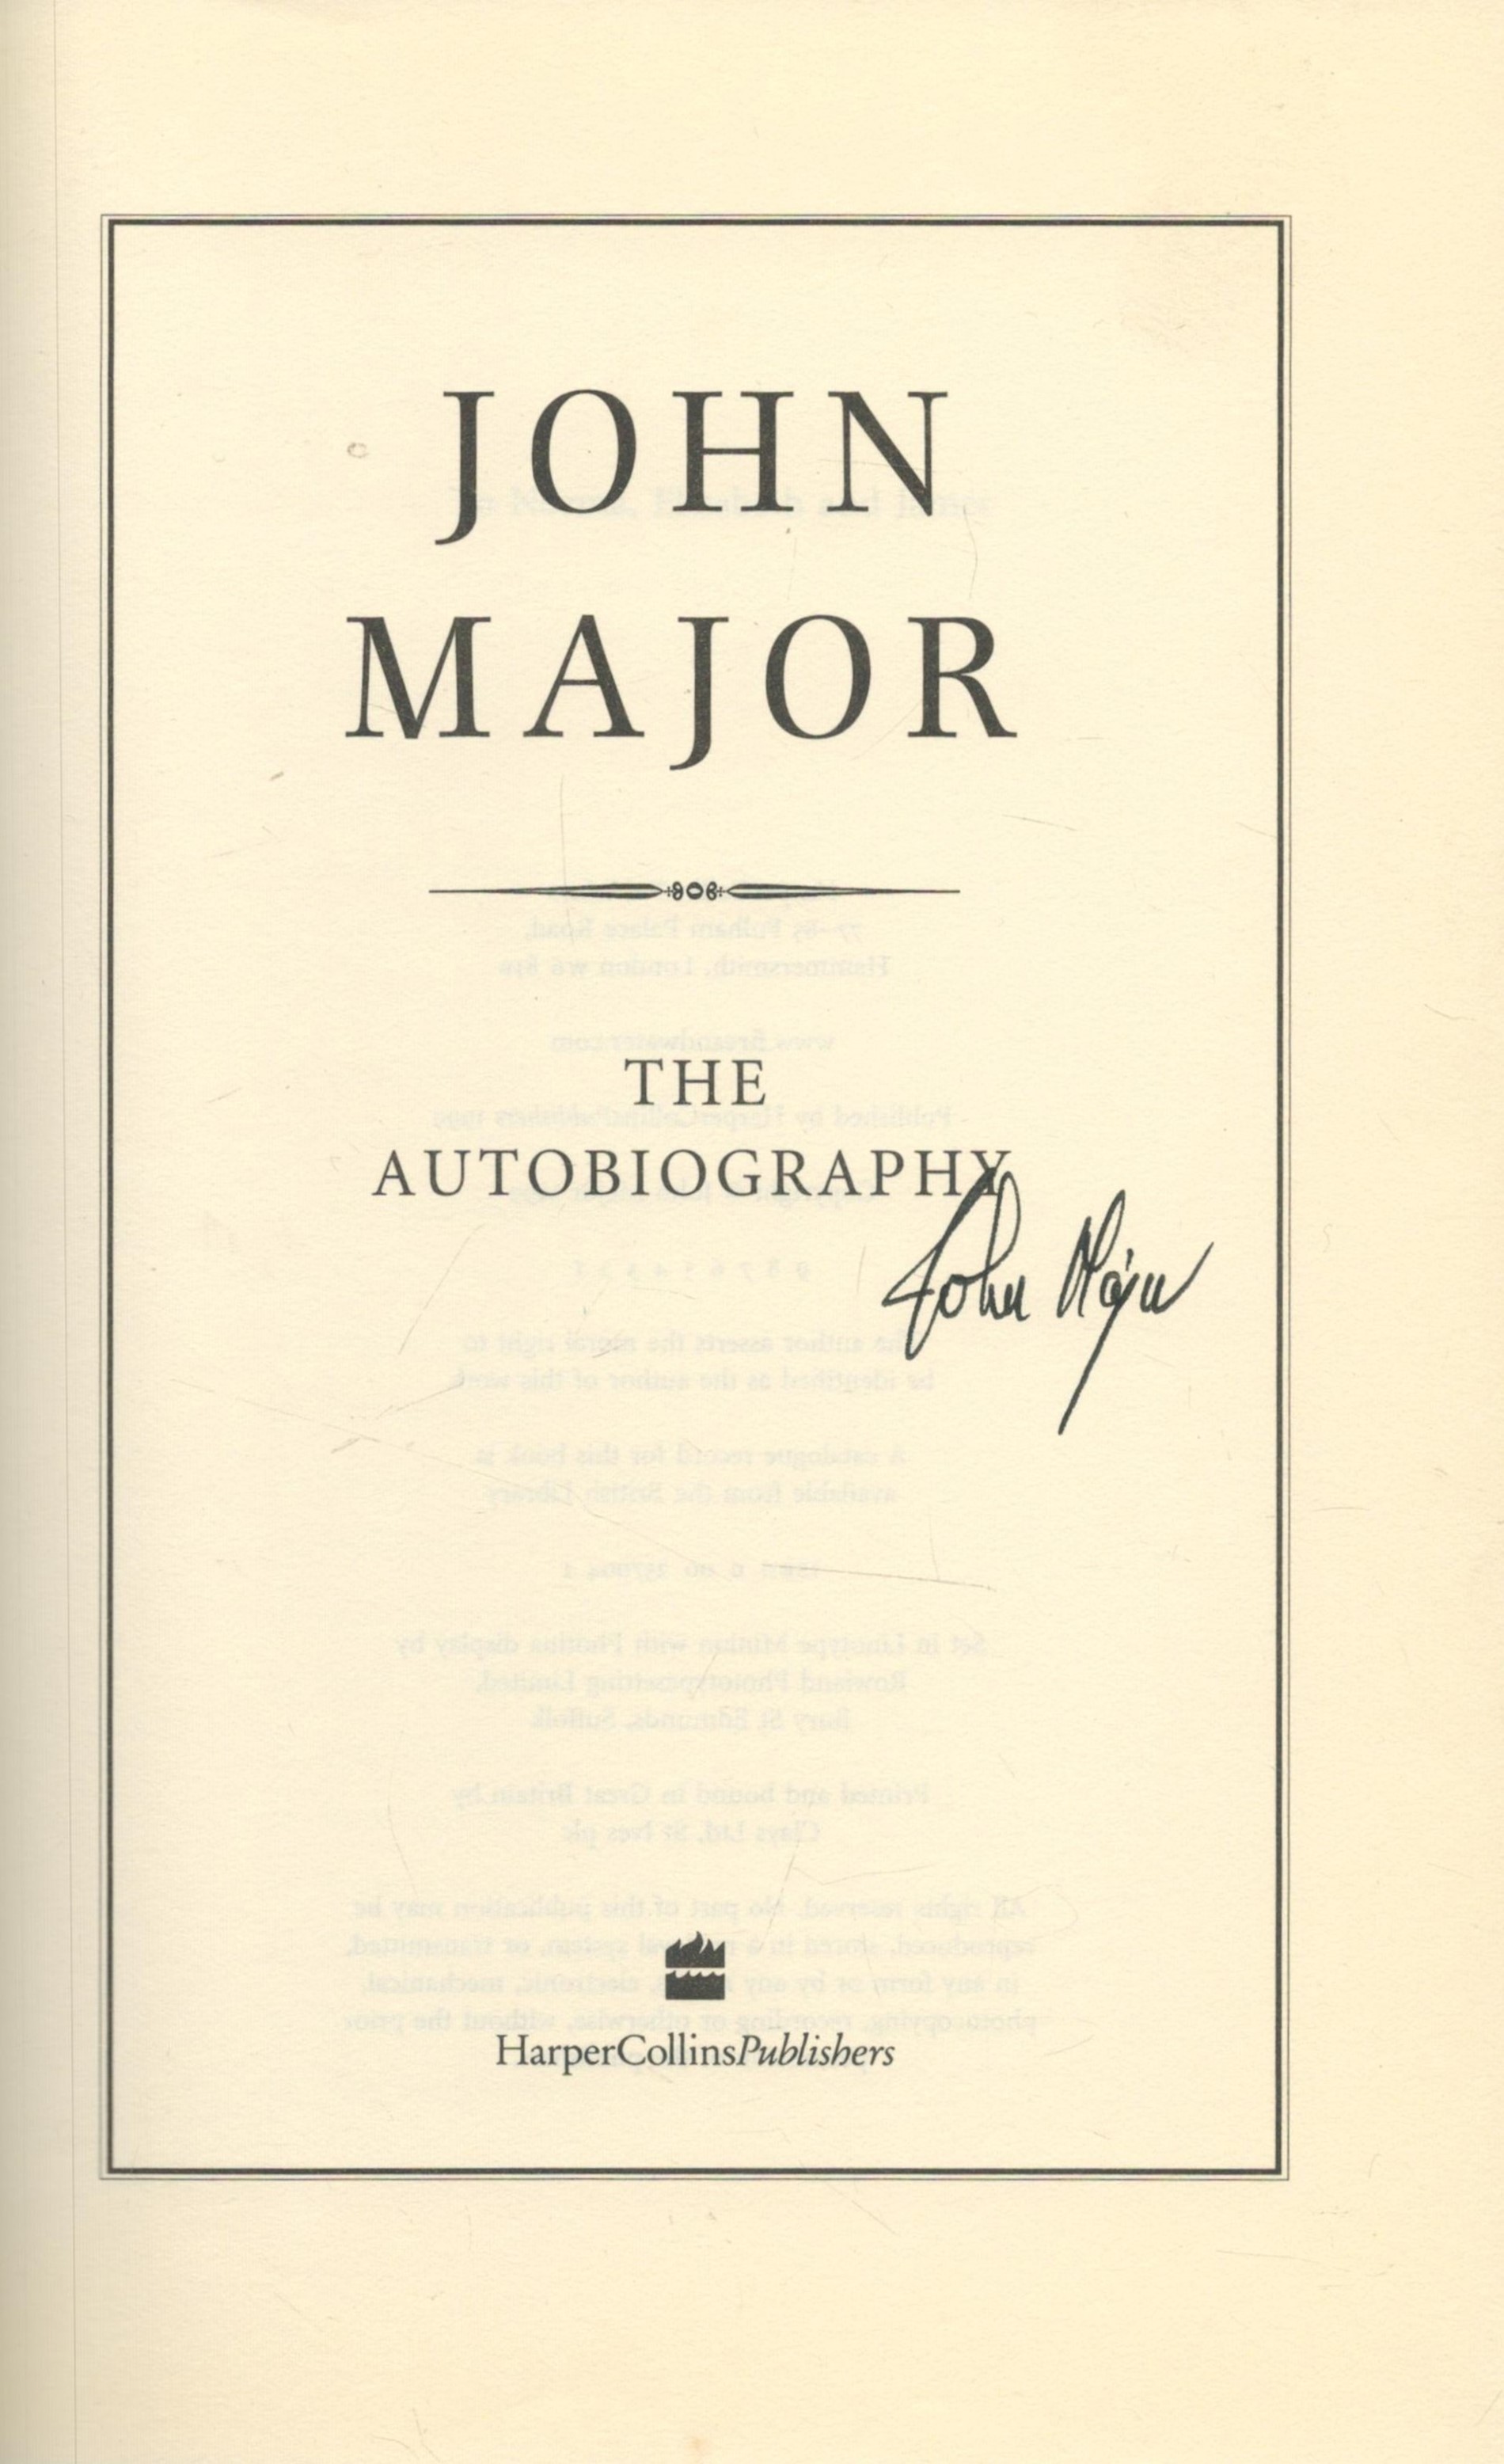 John Major Signed Book John Major The Autobiography by John Major 1999 First Edition Hardback Book - Image 2 of 3